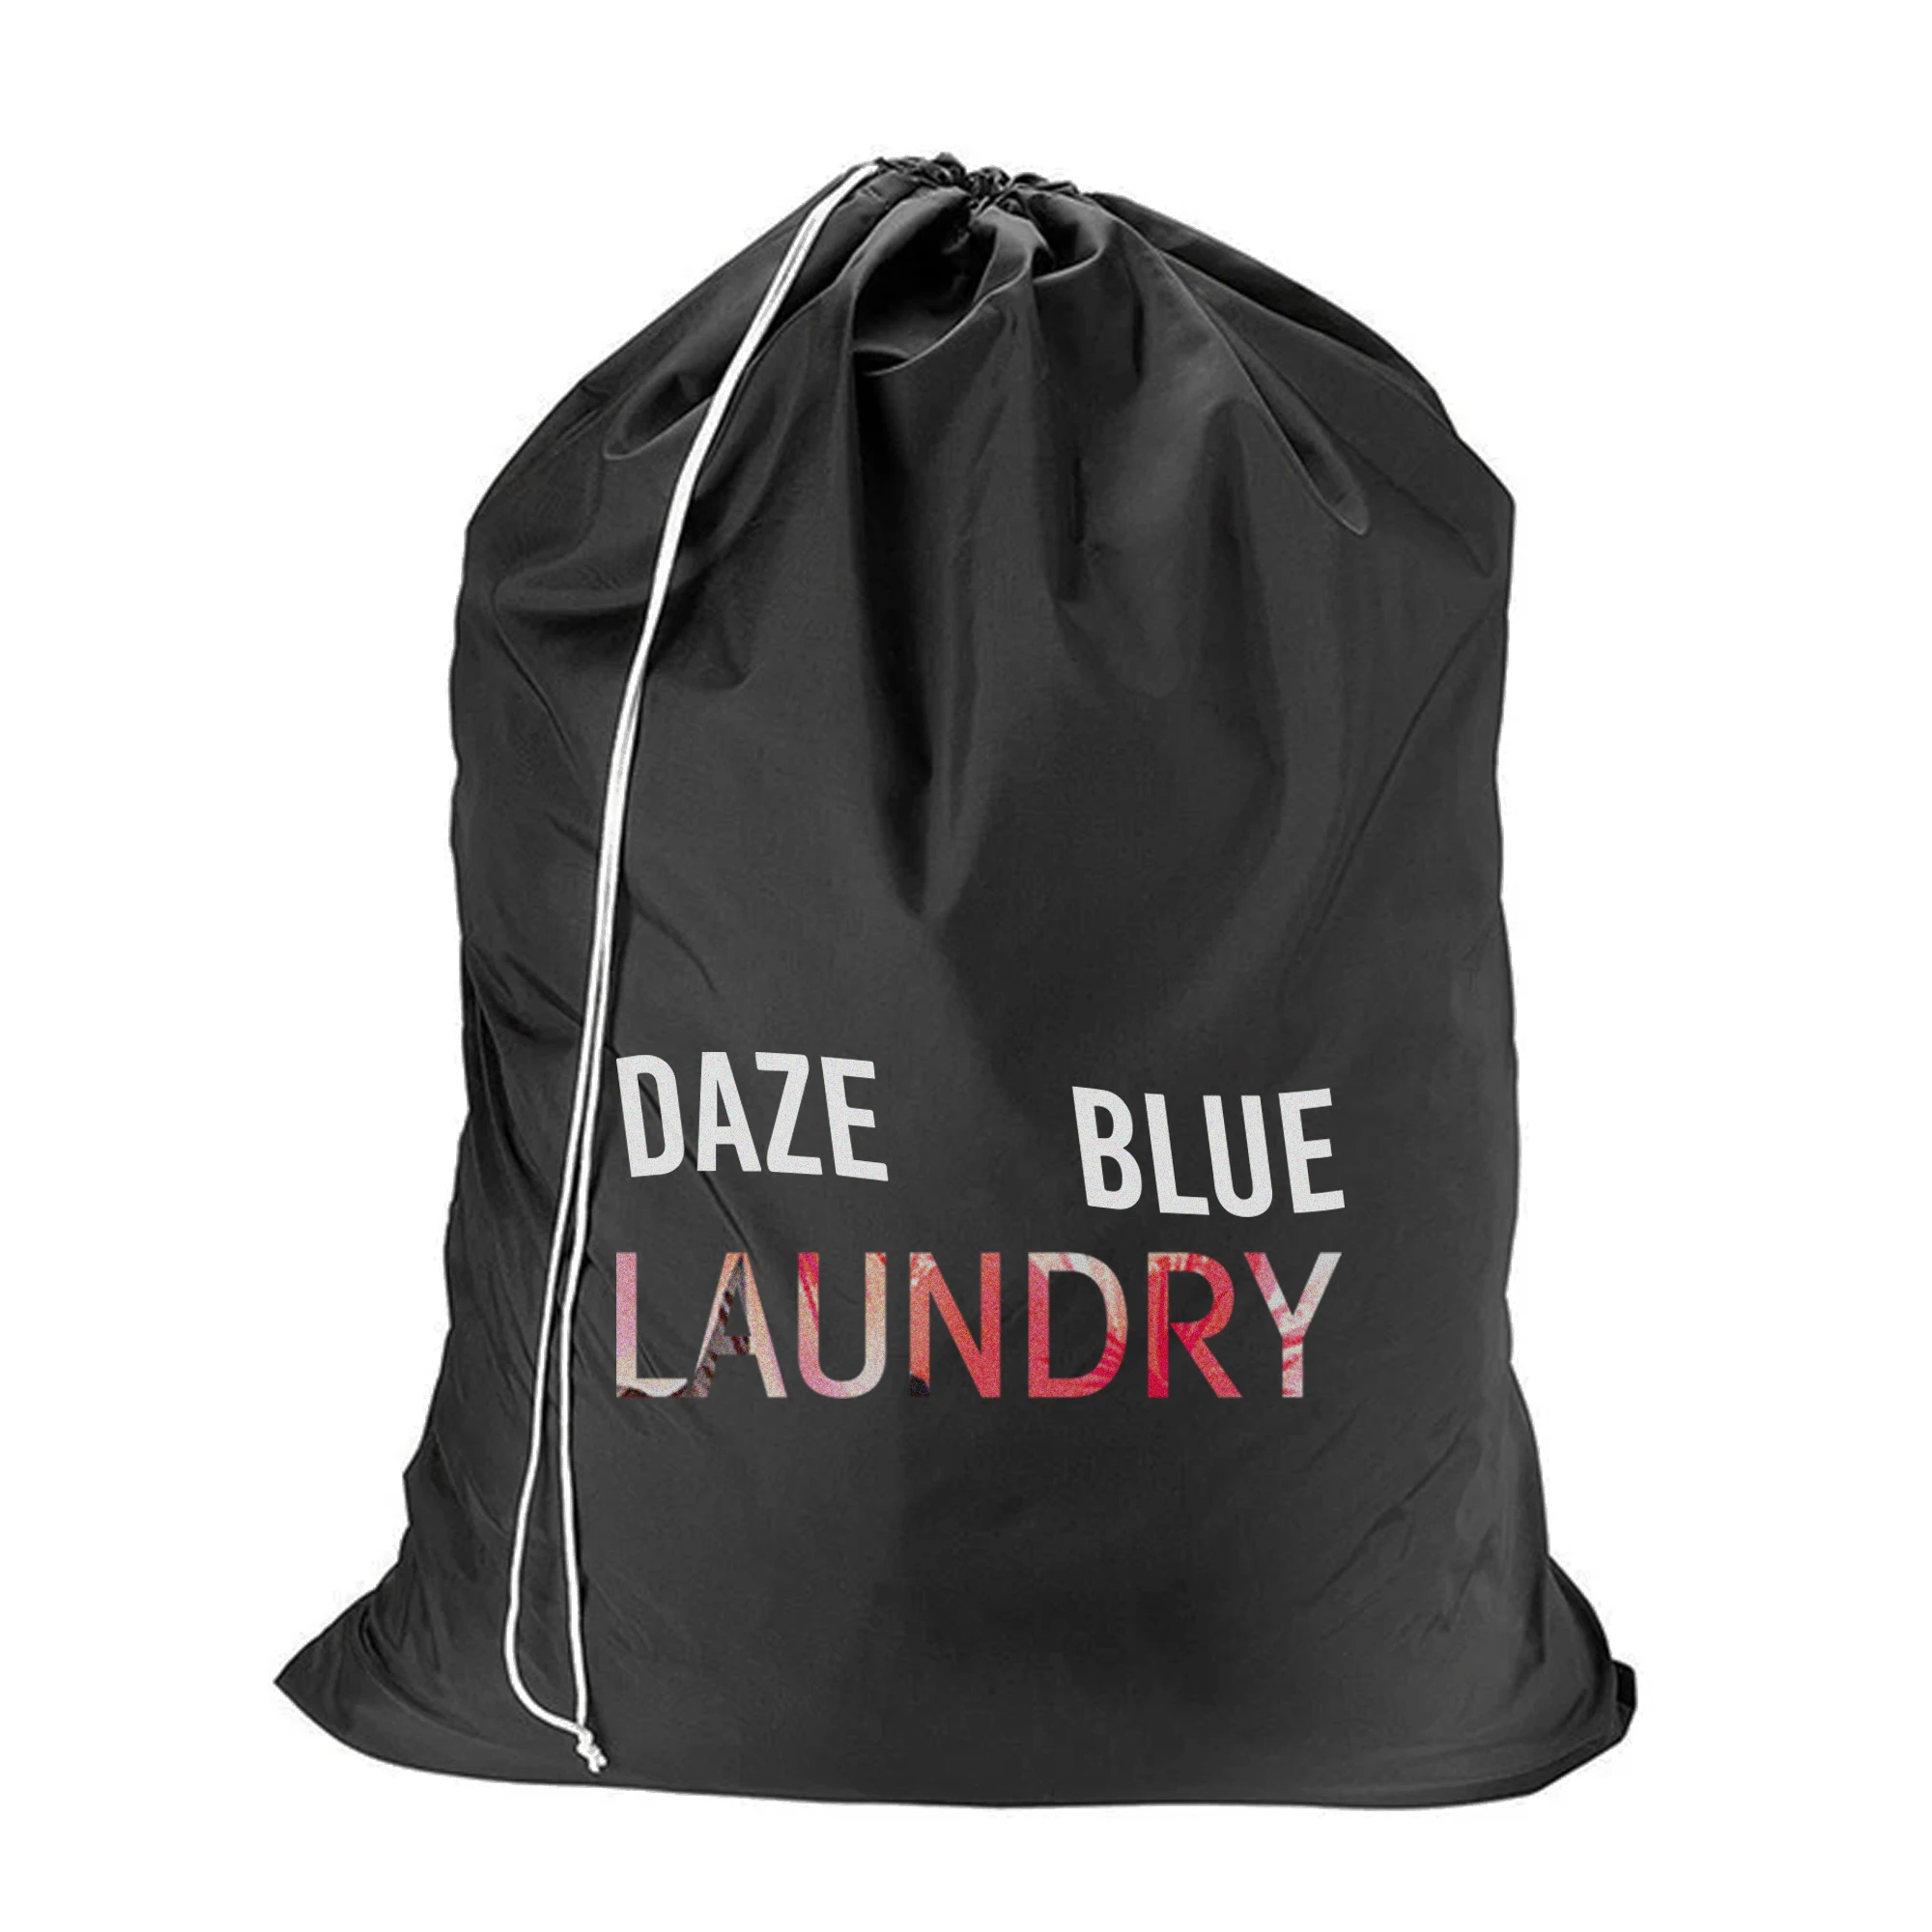 

large dirty waterproof drawstring jumbo nylon laundry bag, Black,white,gay and more